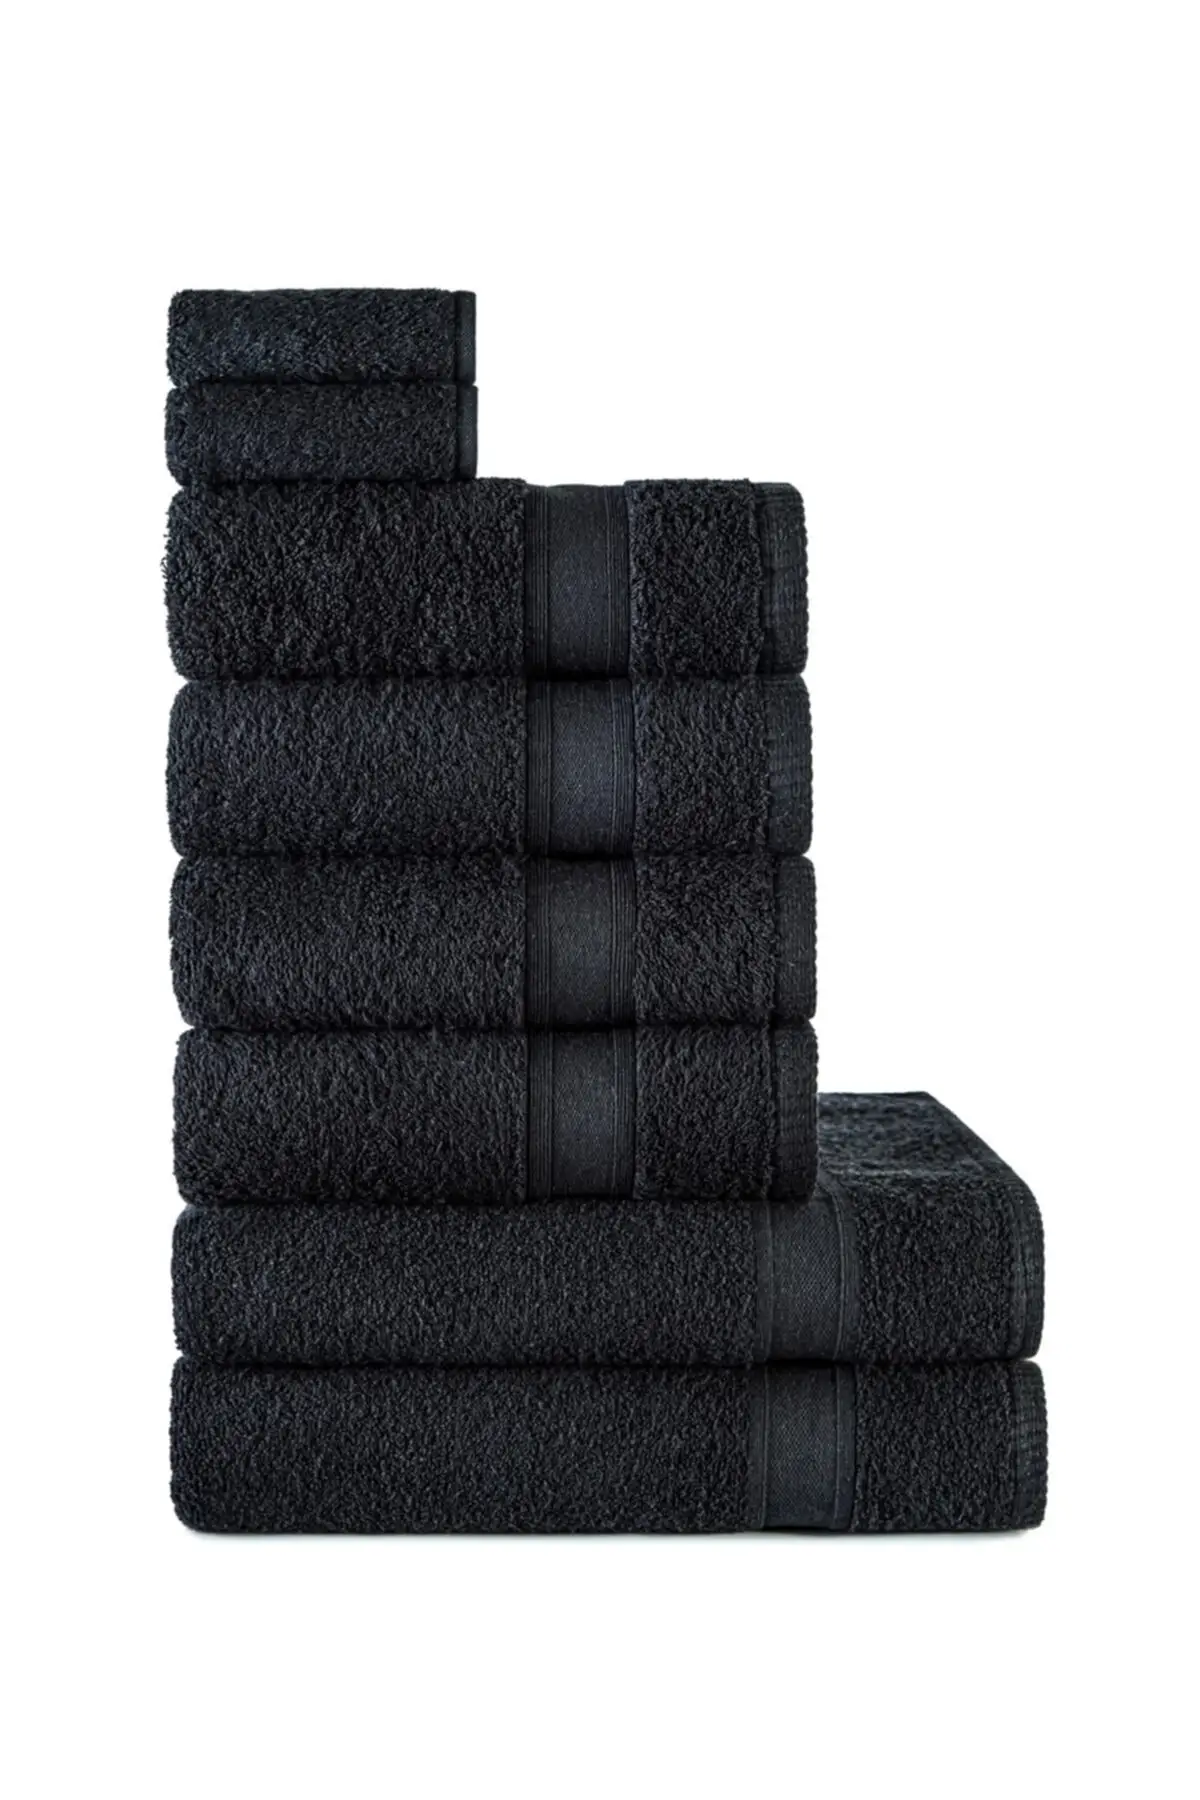 Soft Black Sports Bath Towel Set